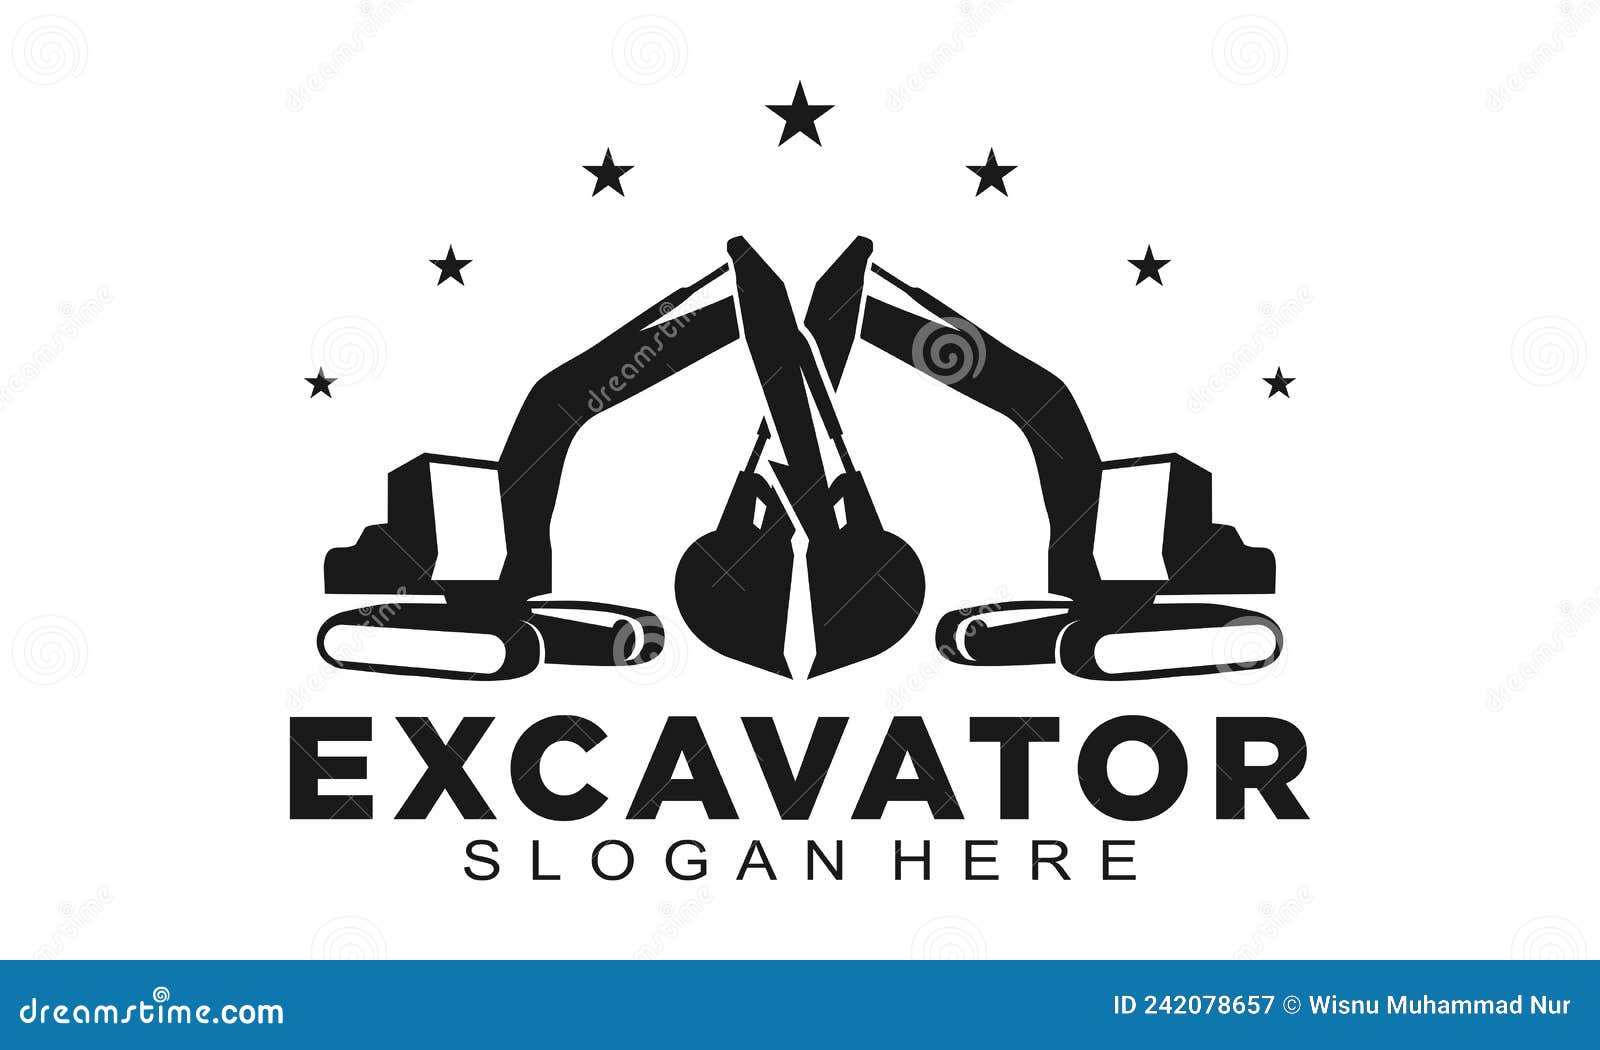 Star Excavator Illustration Logo Design Stock Vector